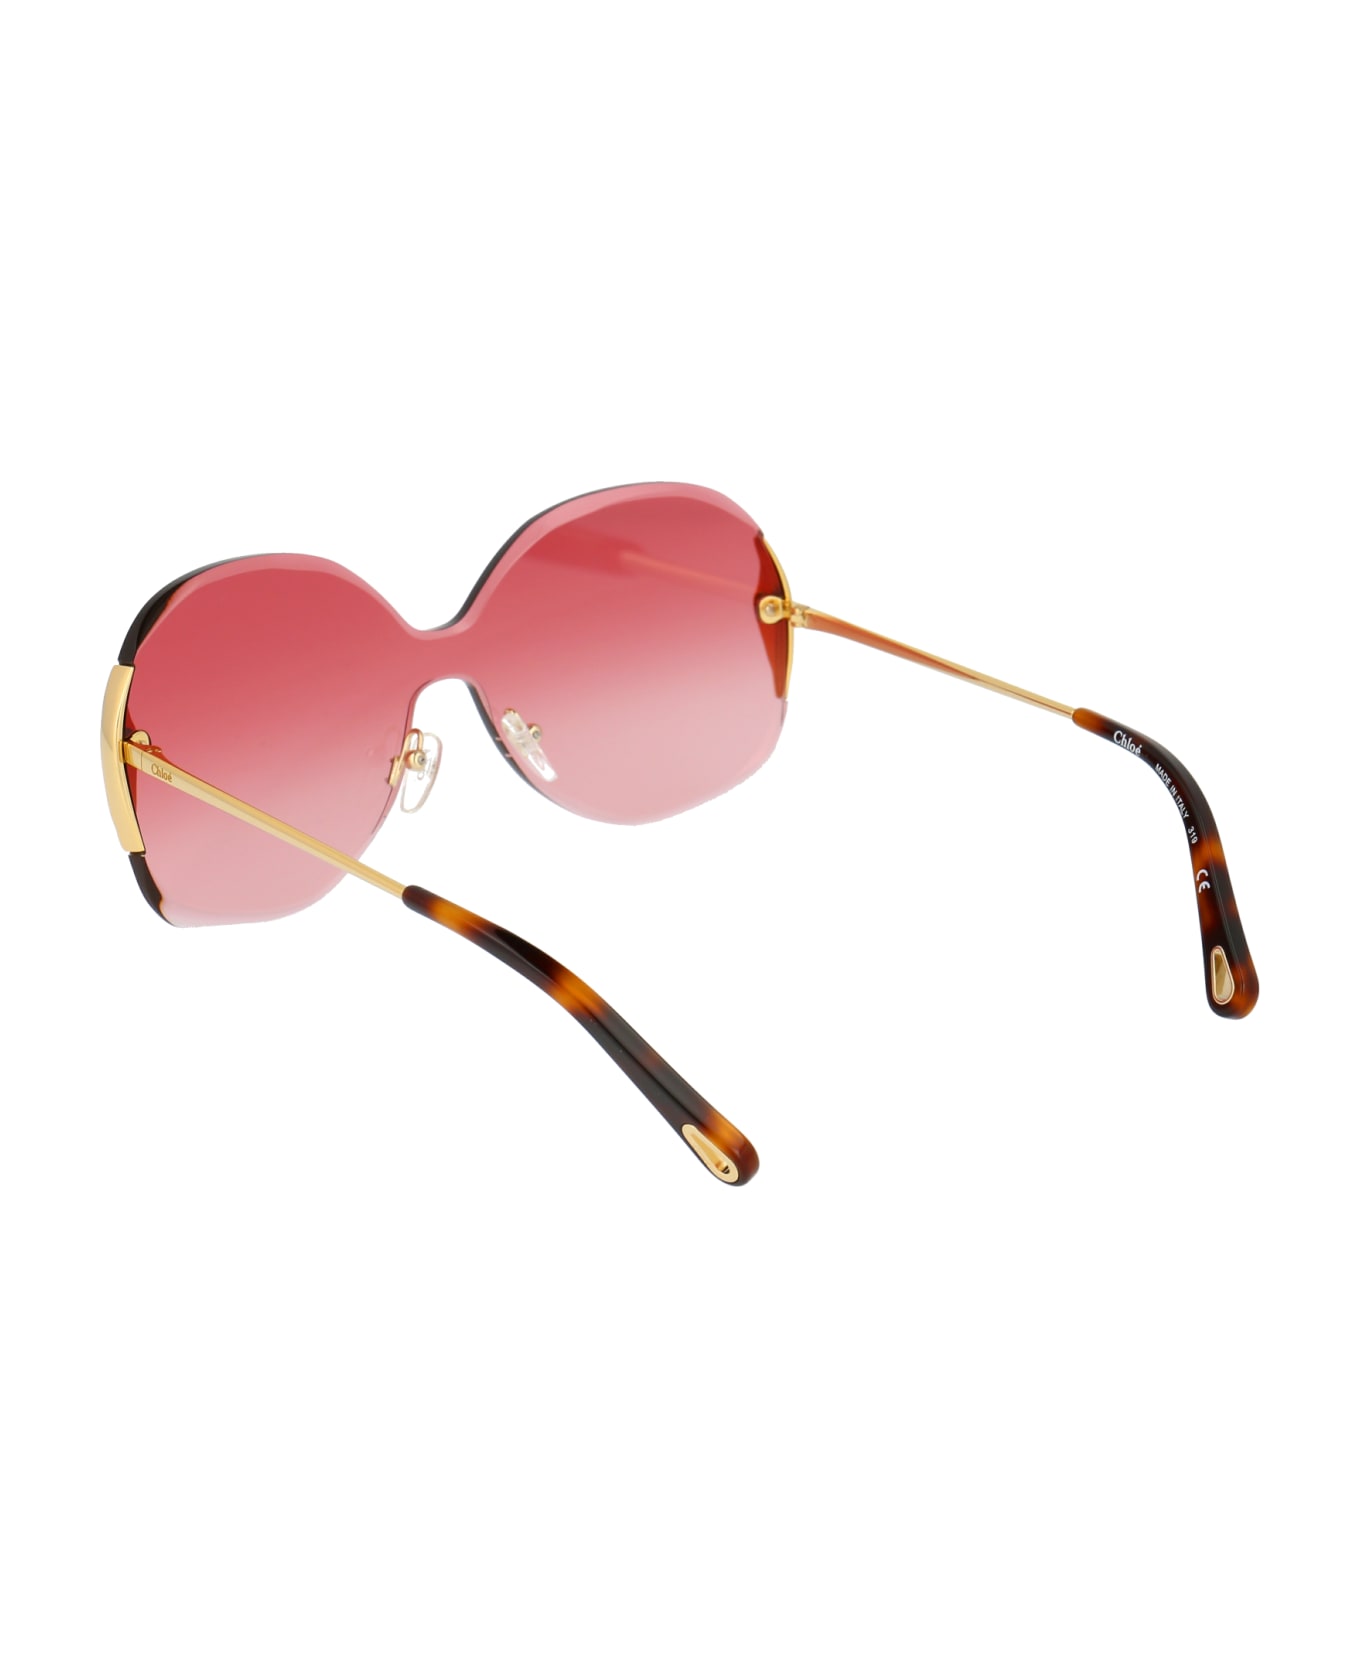 Chloé Eyewear Ce162s Sunglasses - 850 GOLD GRADIENT